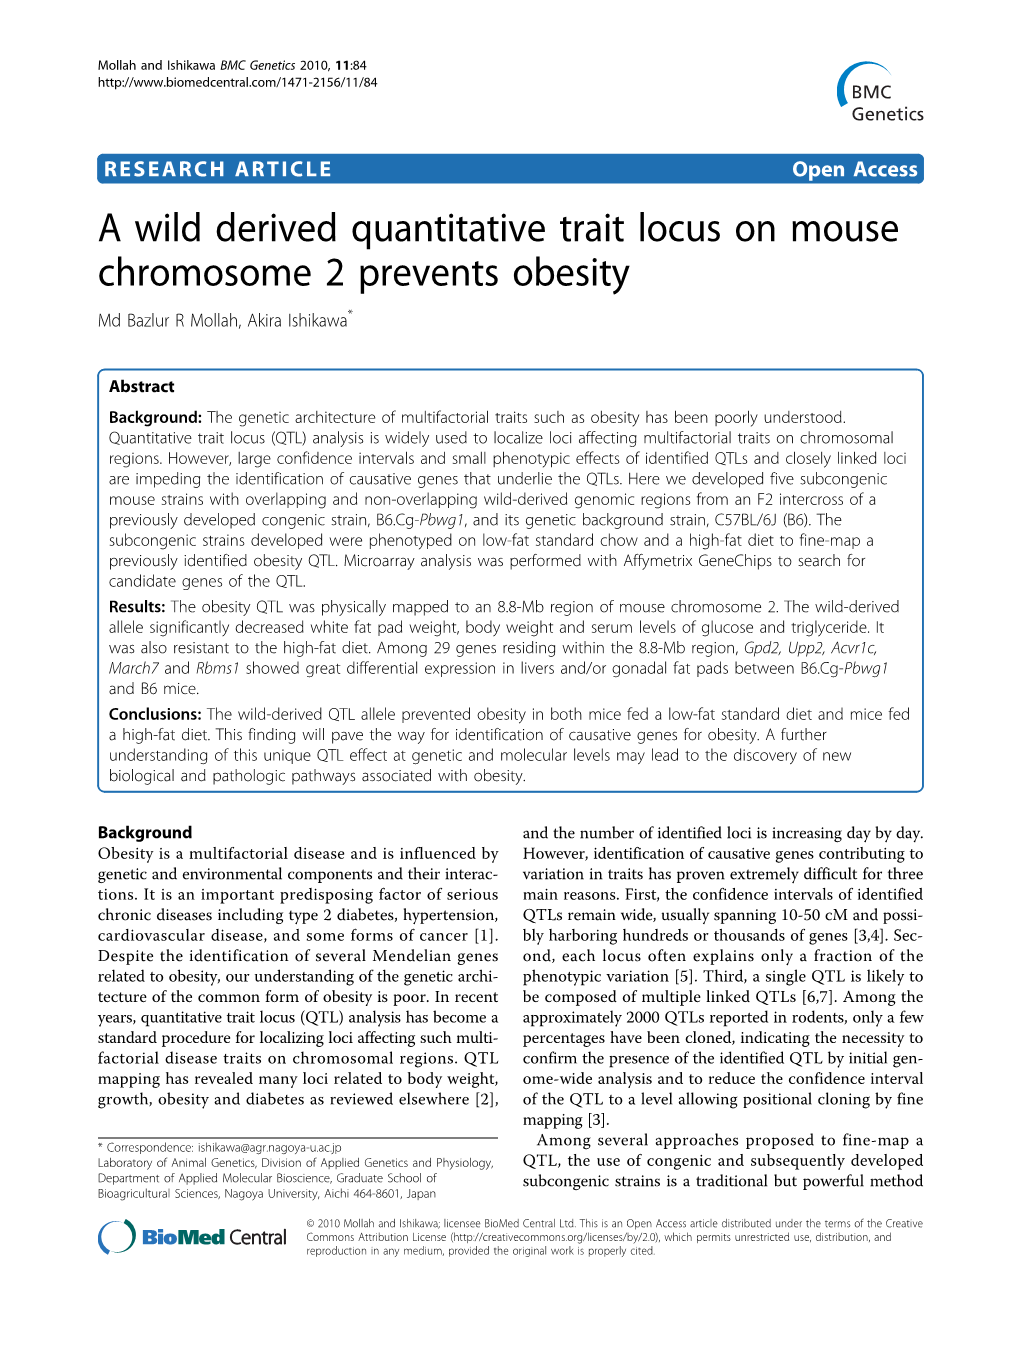 A Wild Derived Quantitative Trait Locus on Mouse Chromosome 2 Prevents Obesity Md Bazlur R Mollah, Akira Ishikawa*